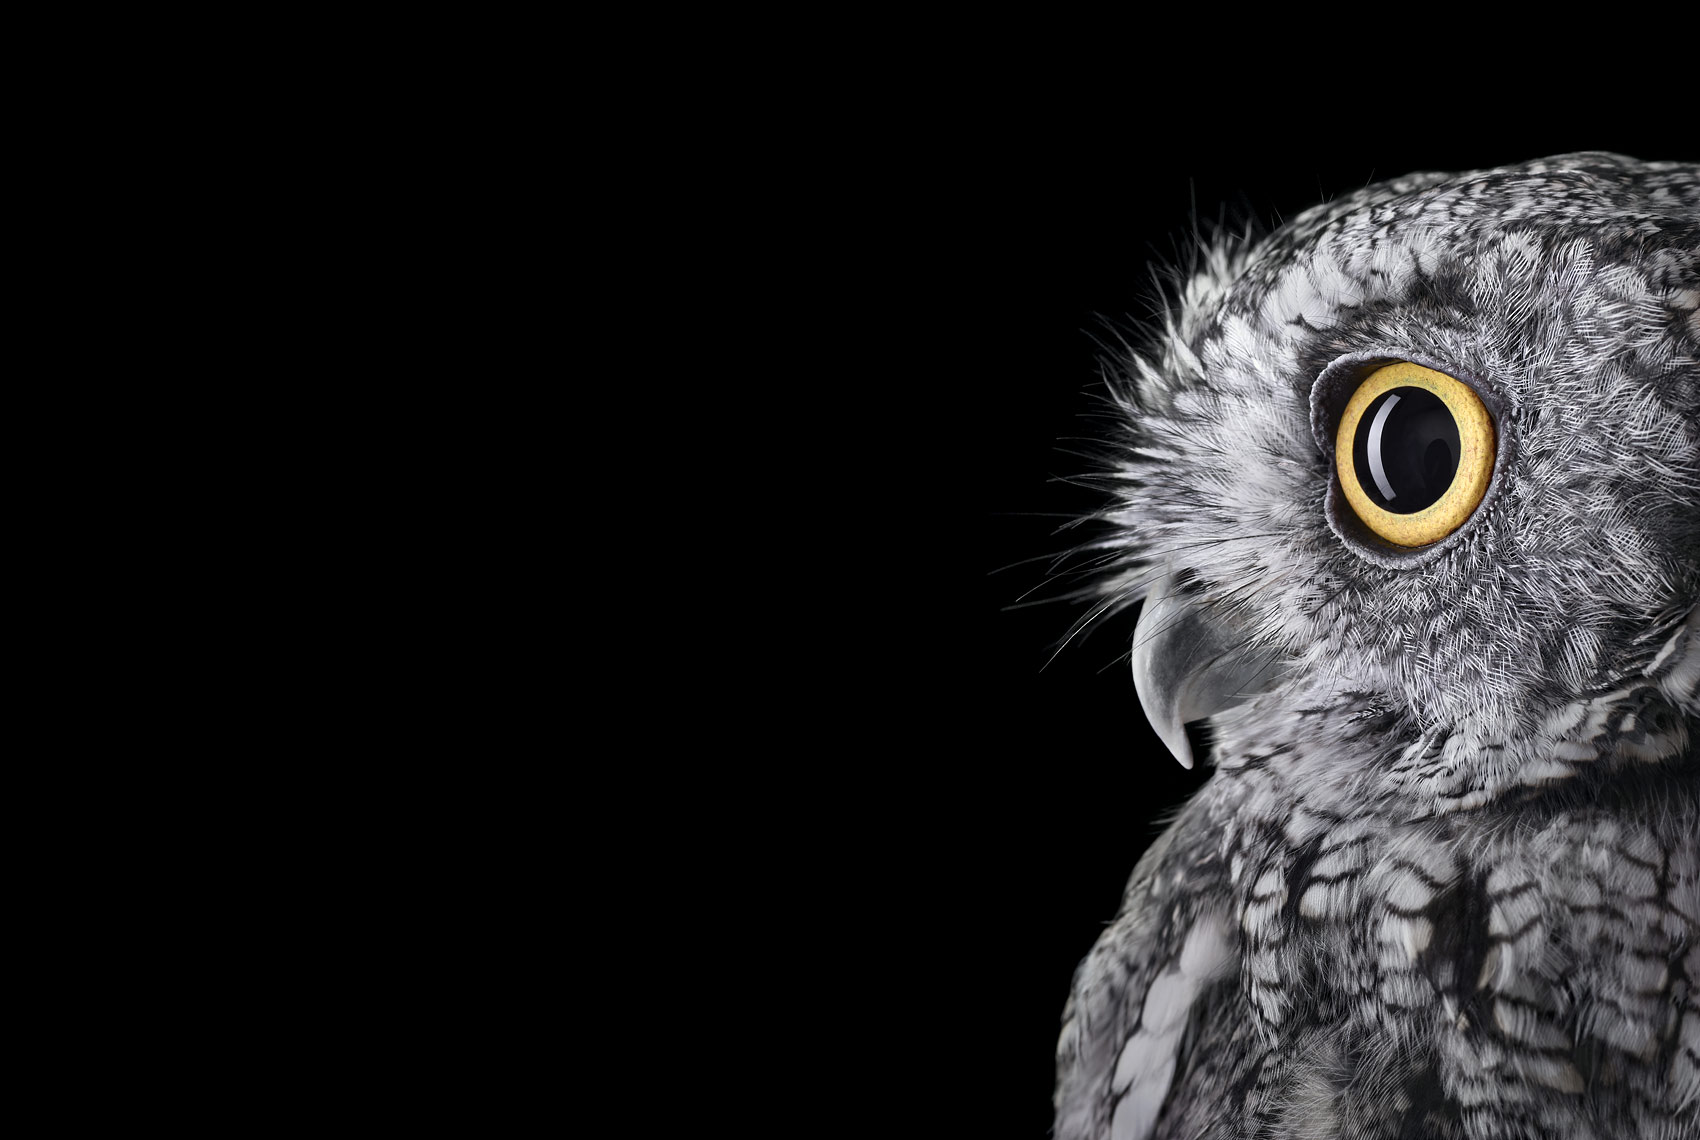 Western screech owl profile portrait by wildlife photographer Brad Wilson